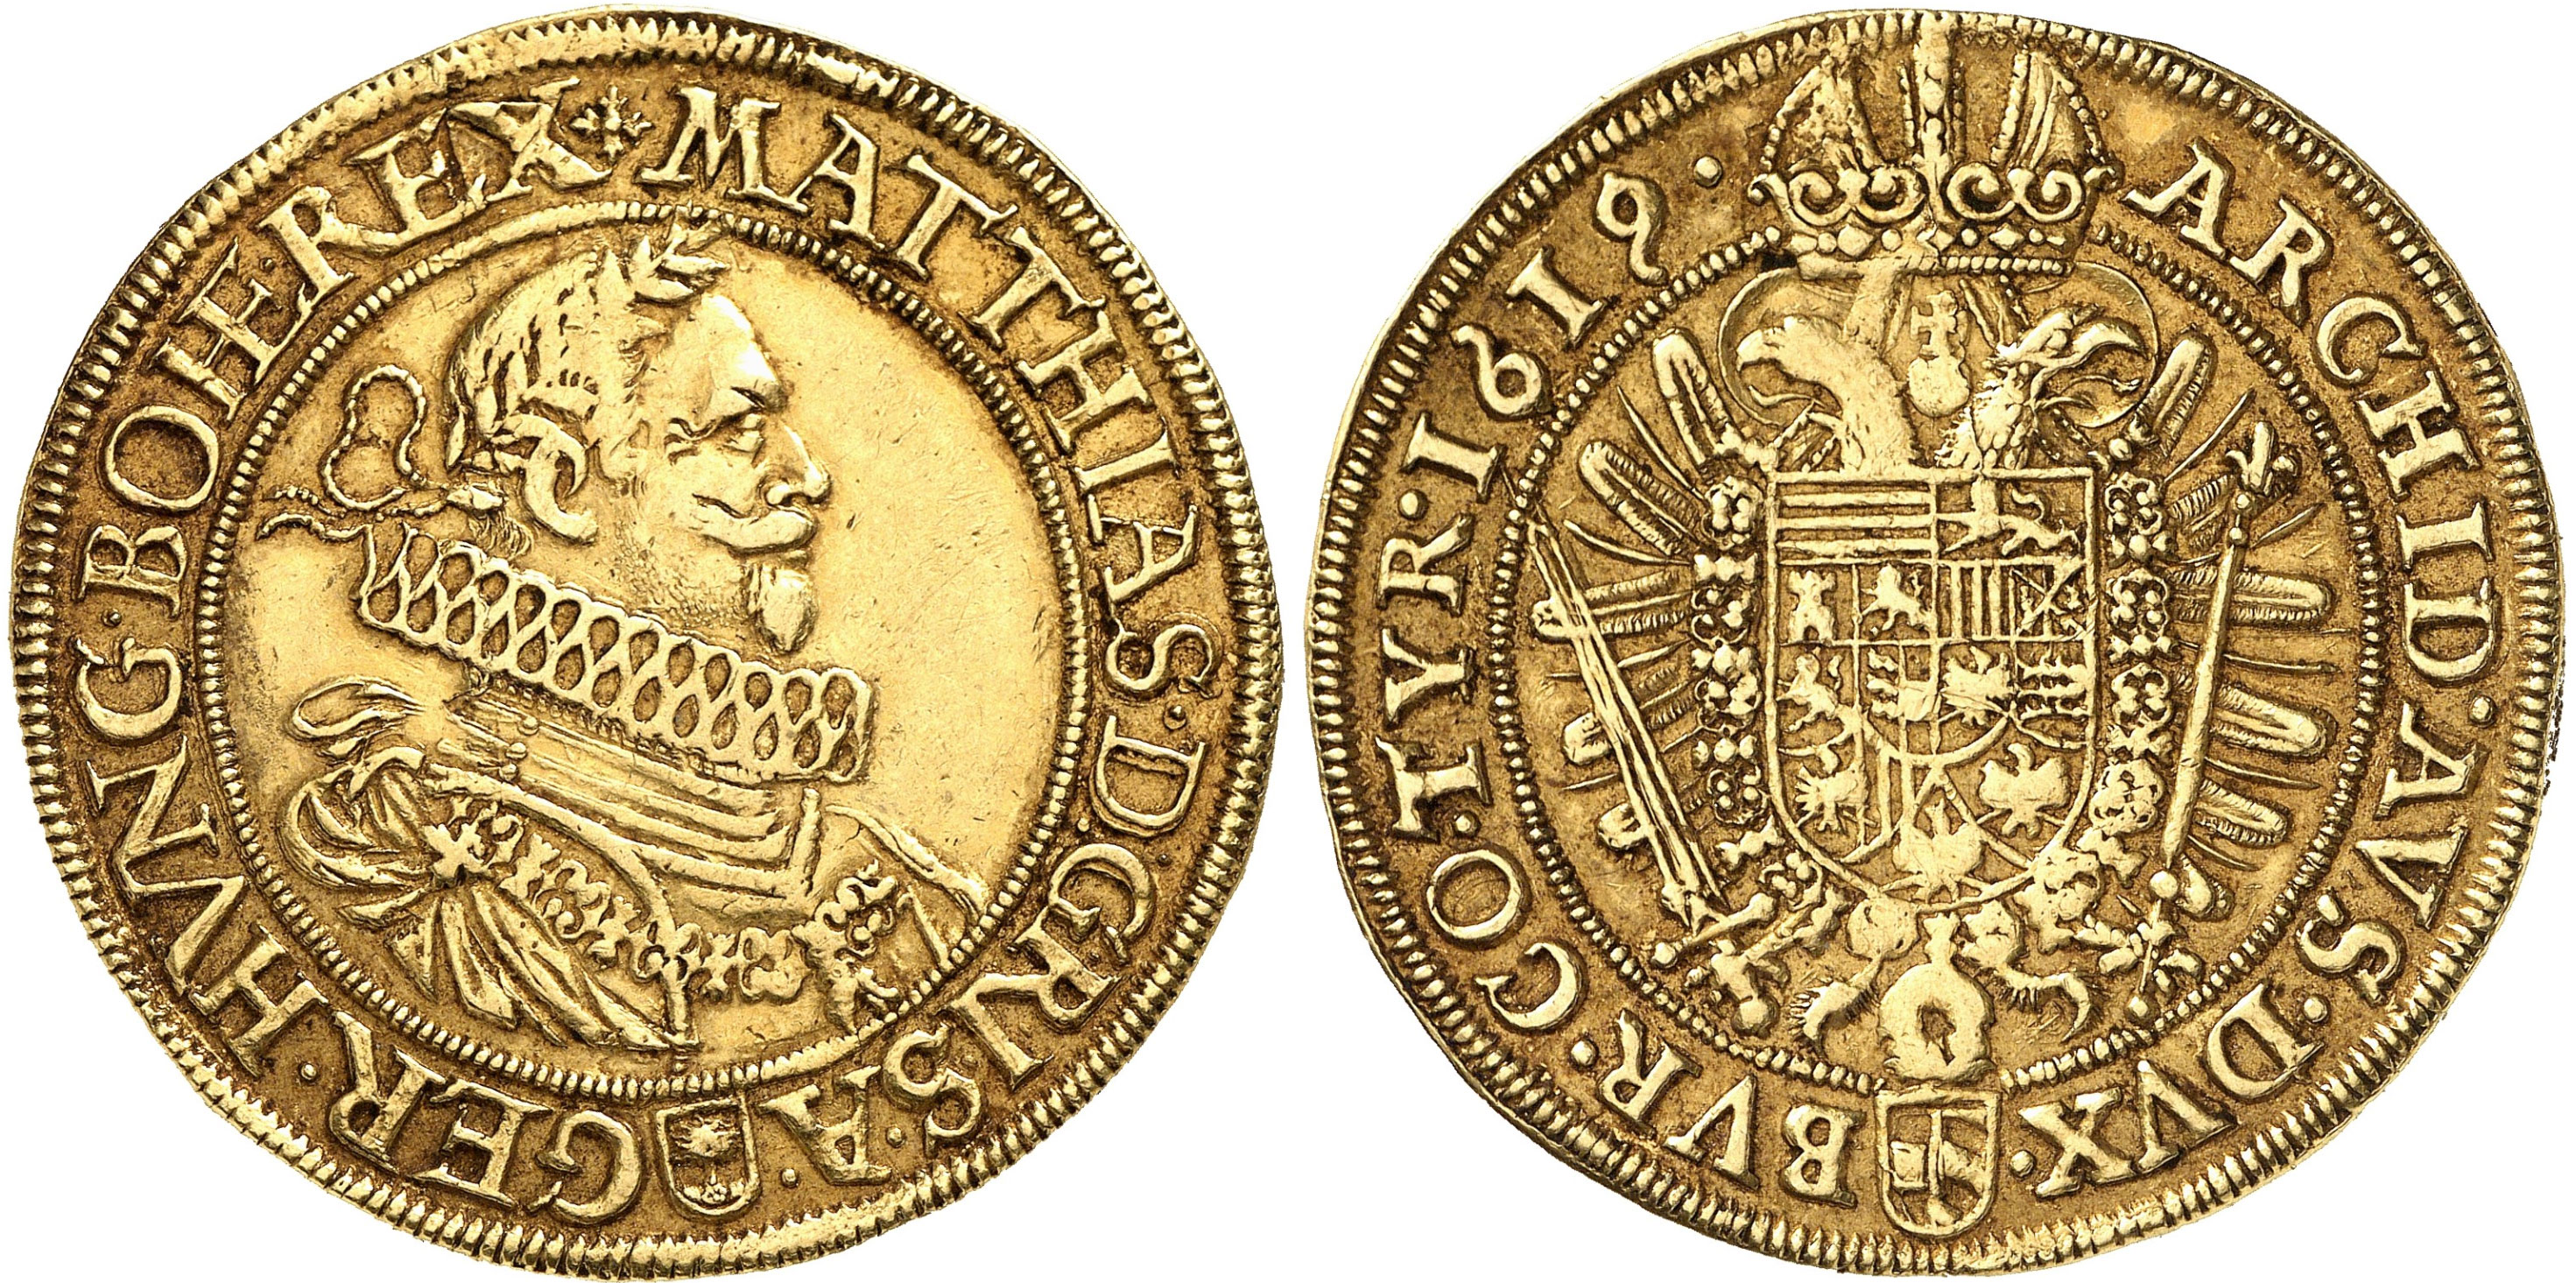 No. 3564: HRE. Matthias, 1608-1612-1619. 10 ducats 1619, Vienna. Very rare. Good very fine. Estimate: €25,000. Hammer price: €120,000